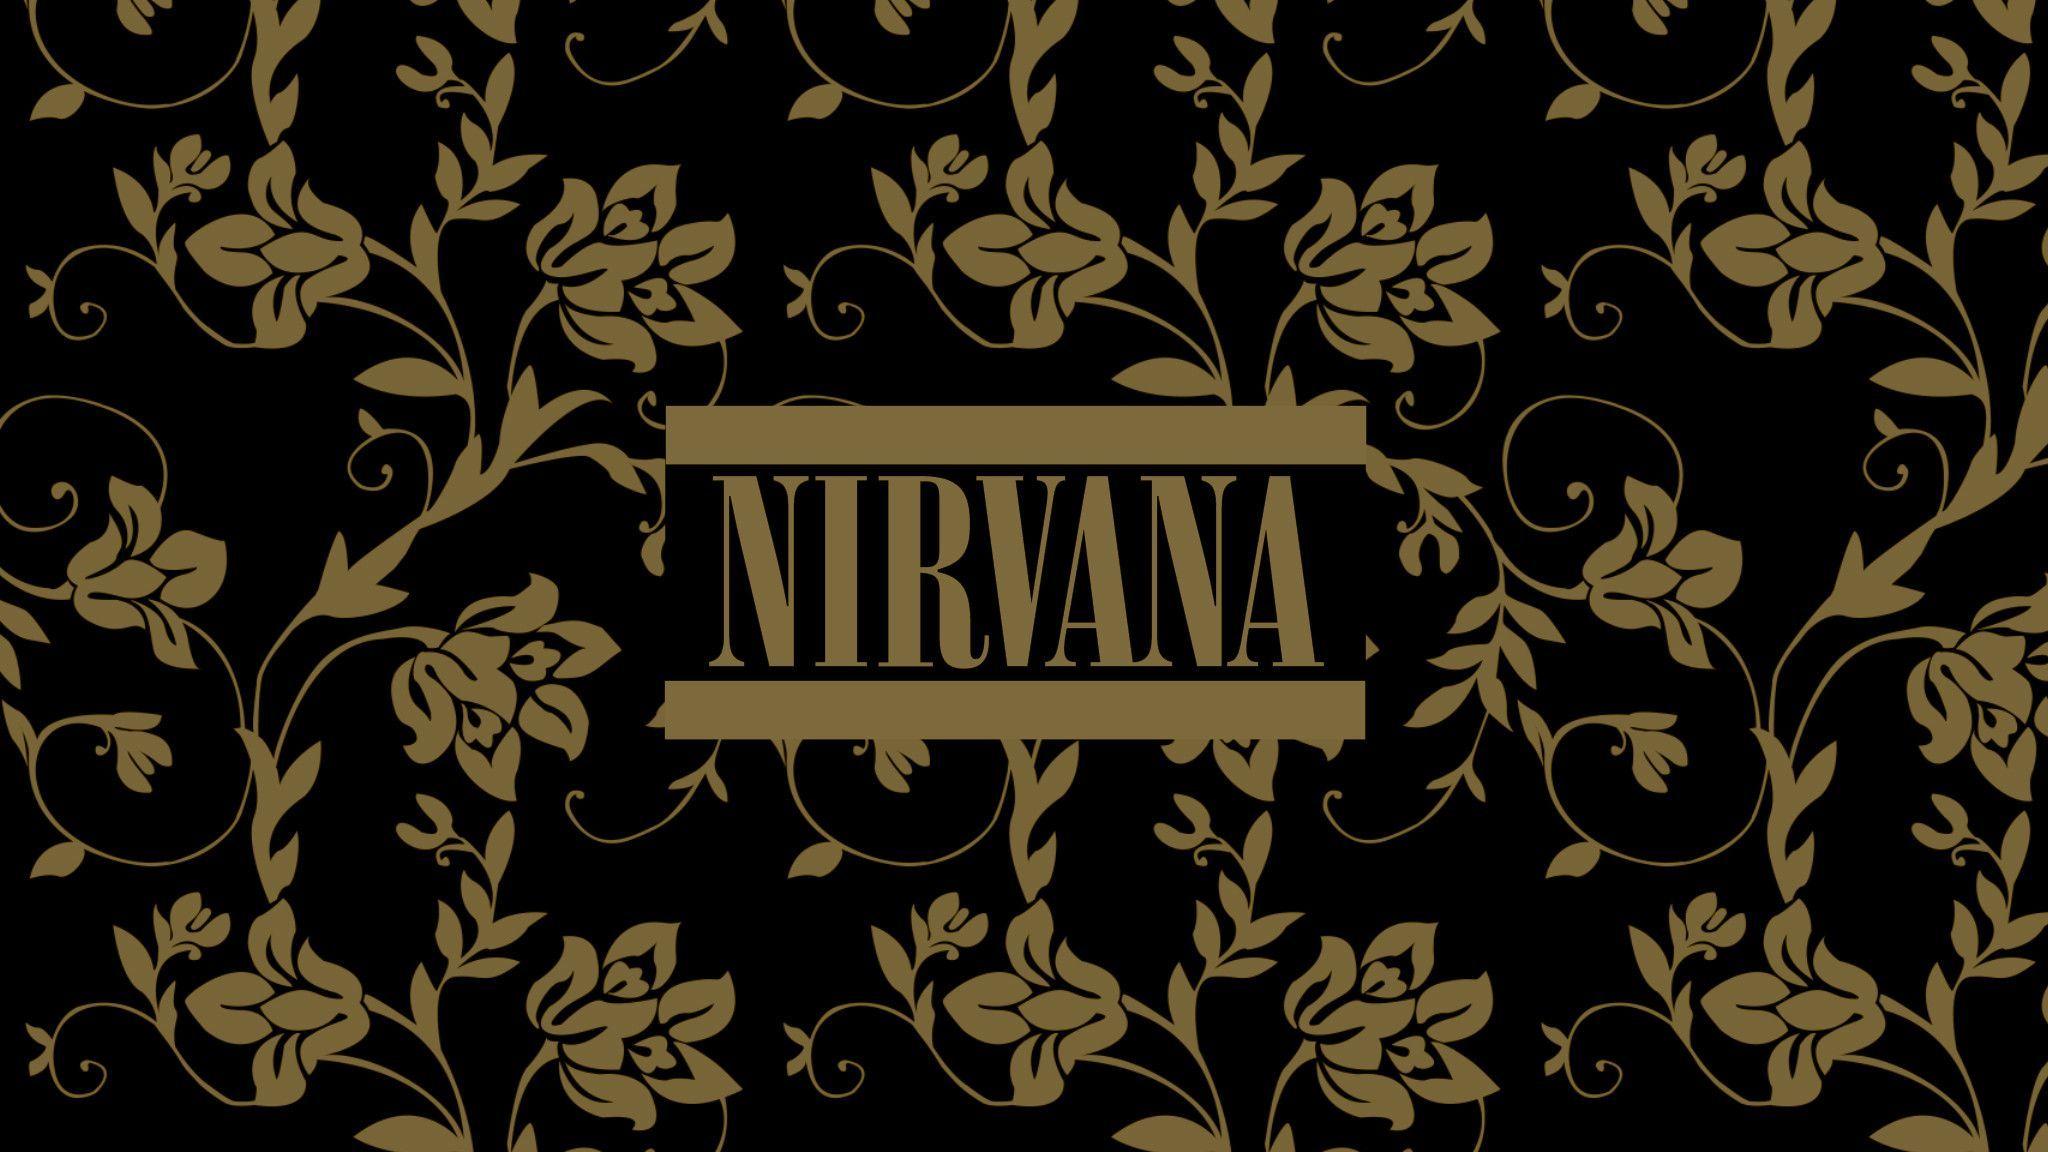 Grunge Desktop Wallpaper Group. Nirvana wallpaper, Band